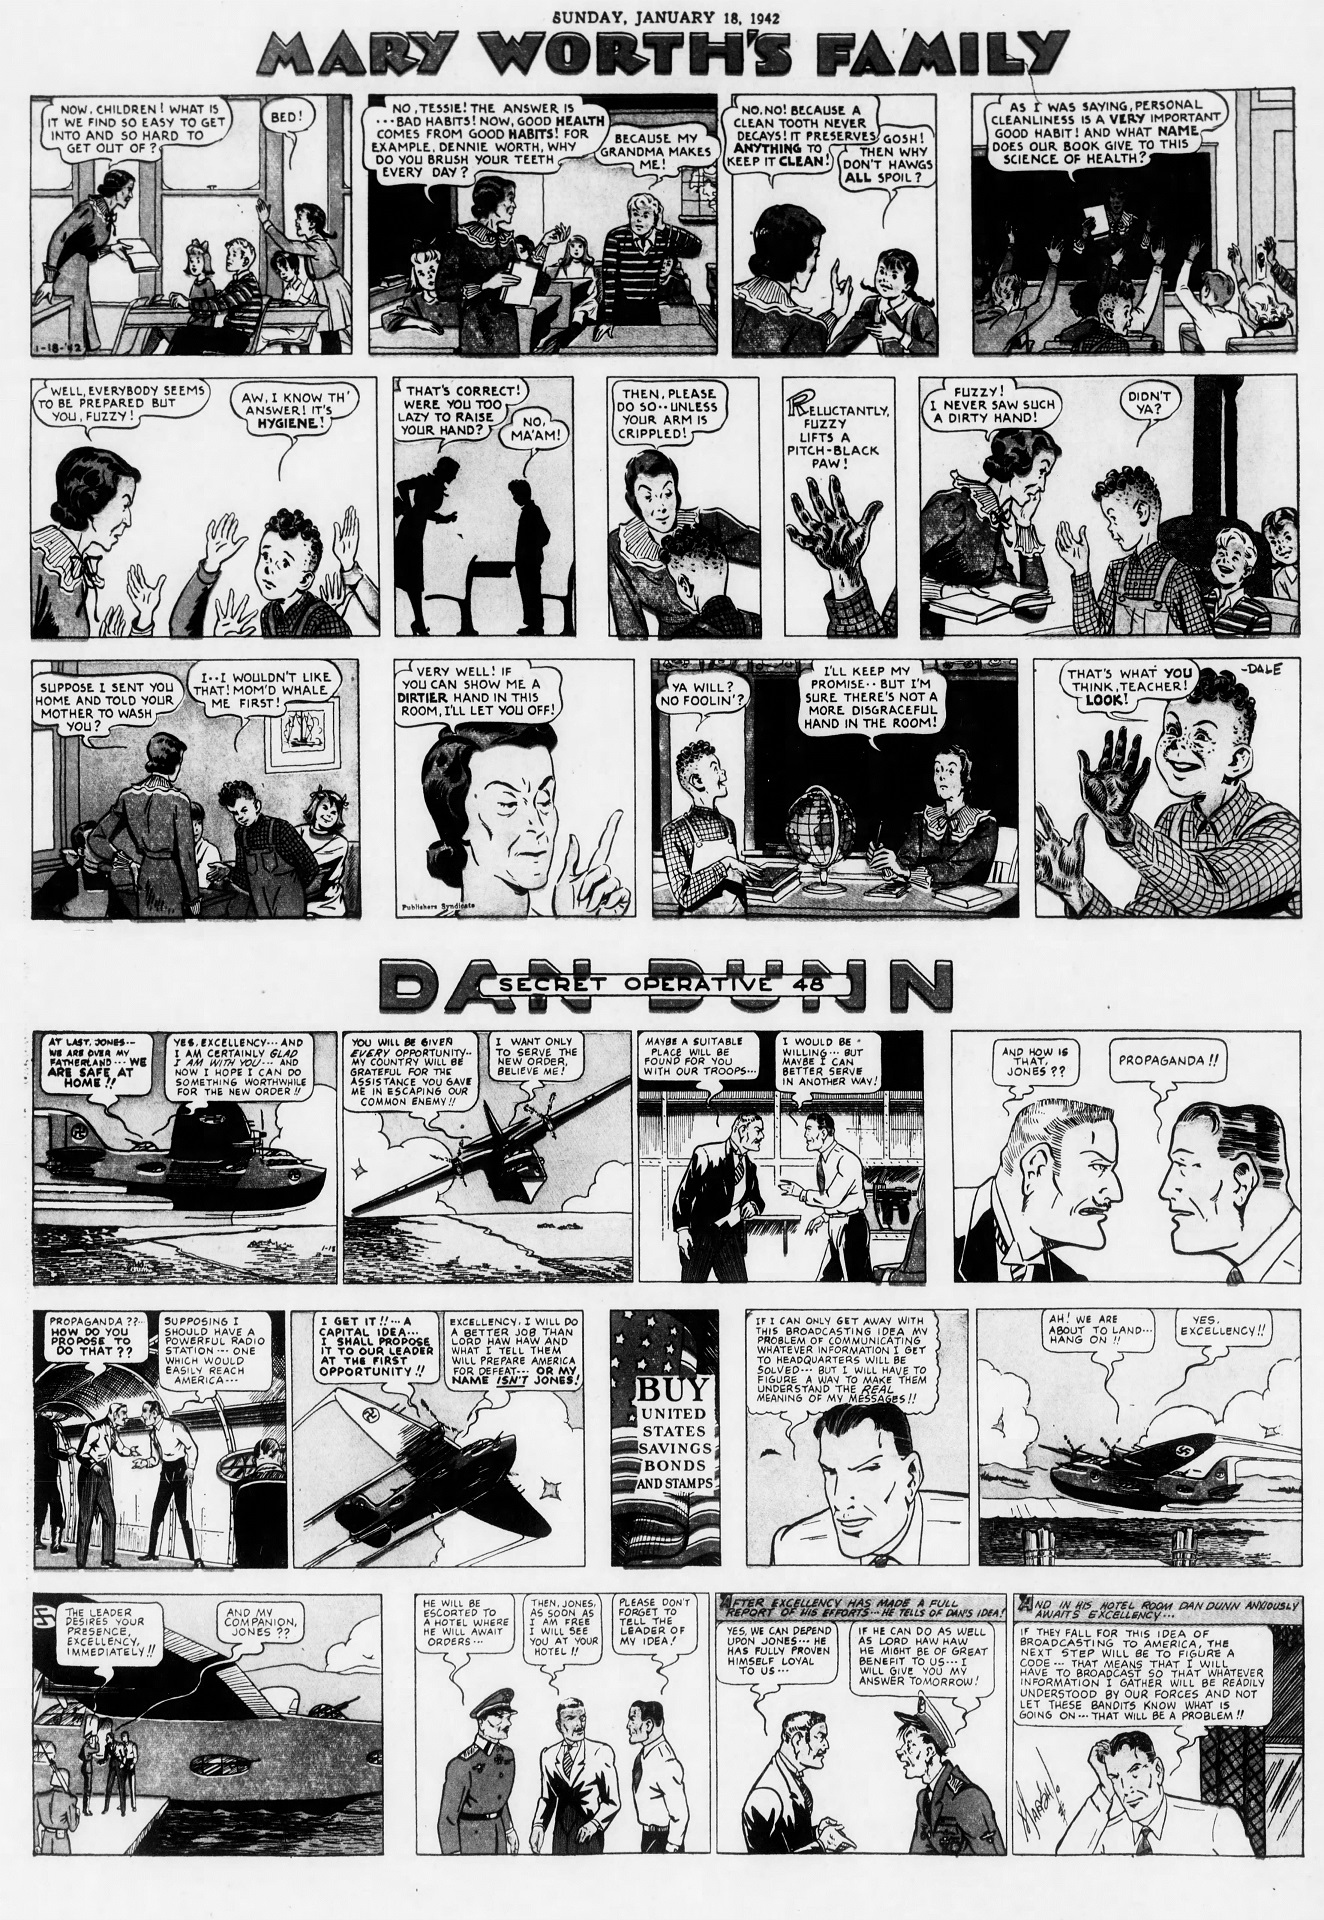 The_Brooklyn_Daily_Eagle_Sun__Jan_18__1942_(8).jpg